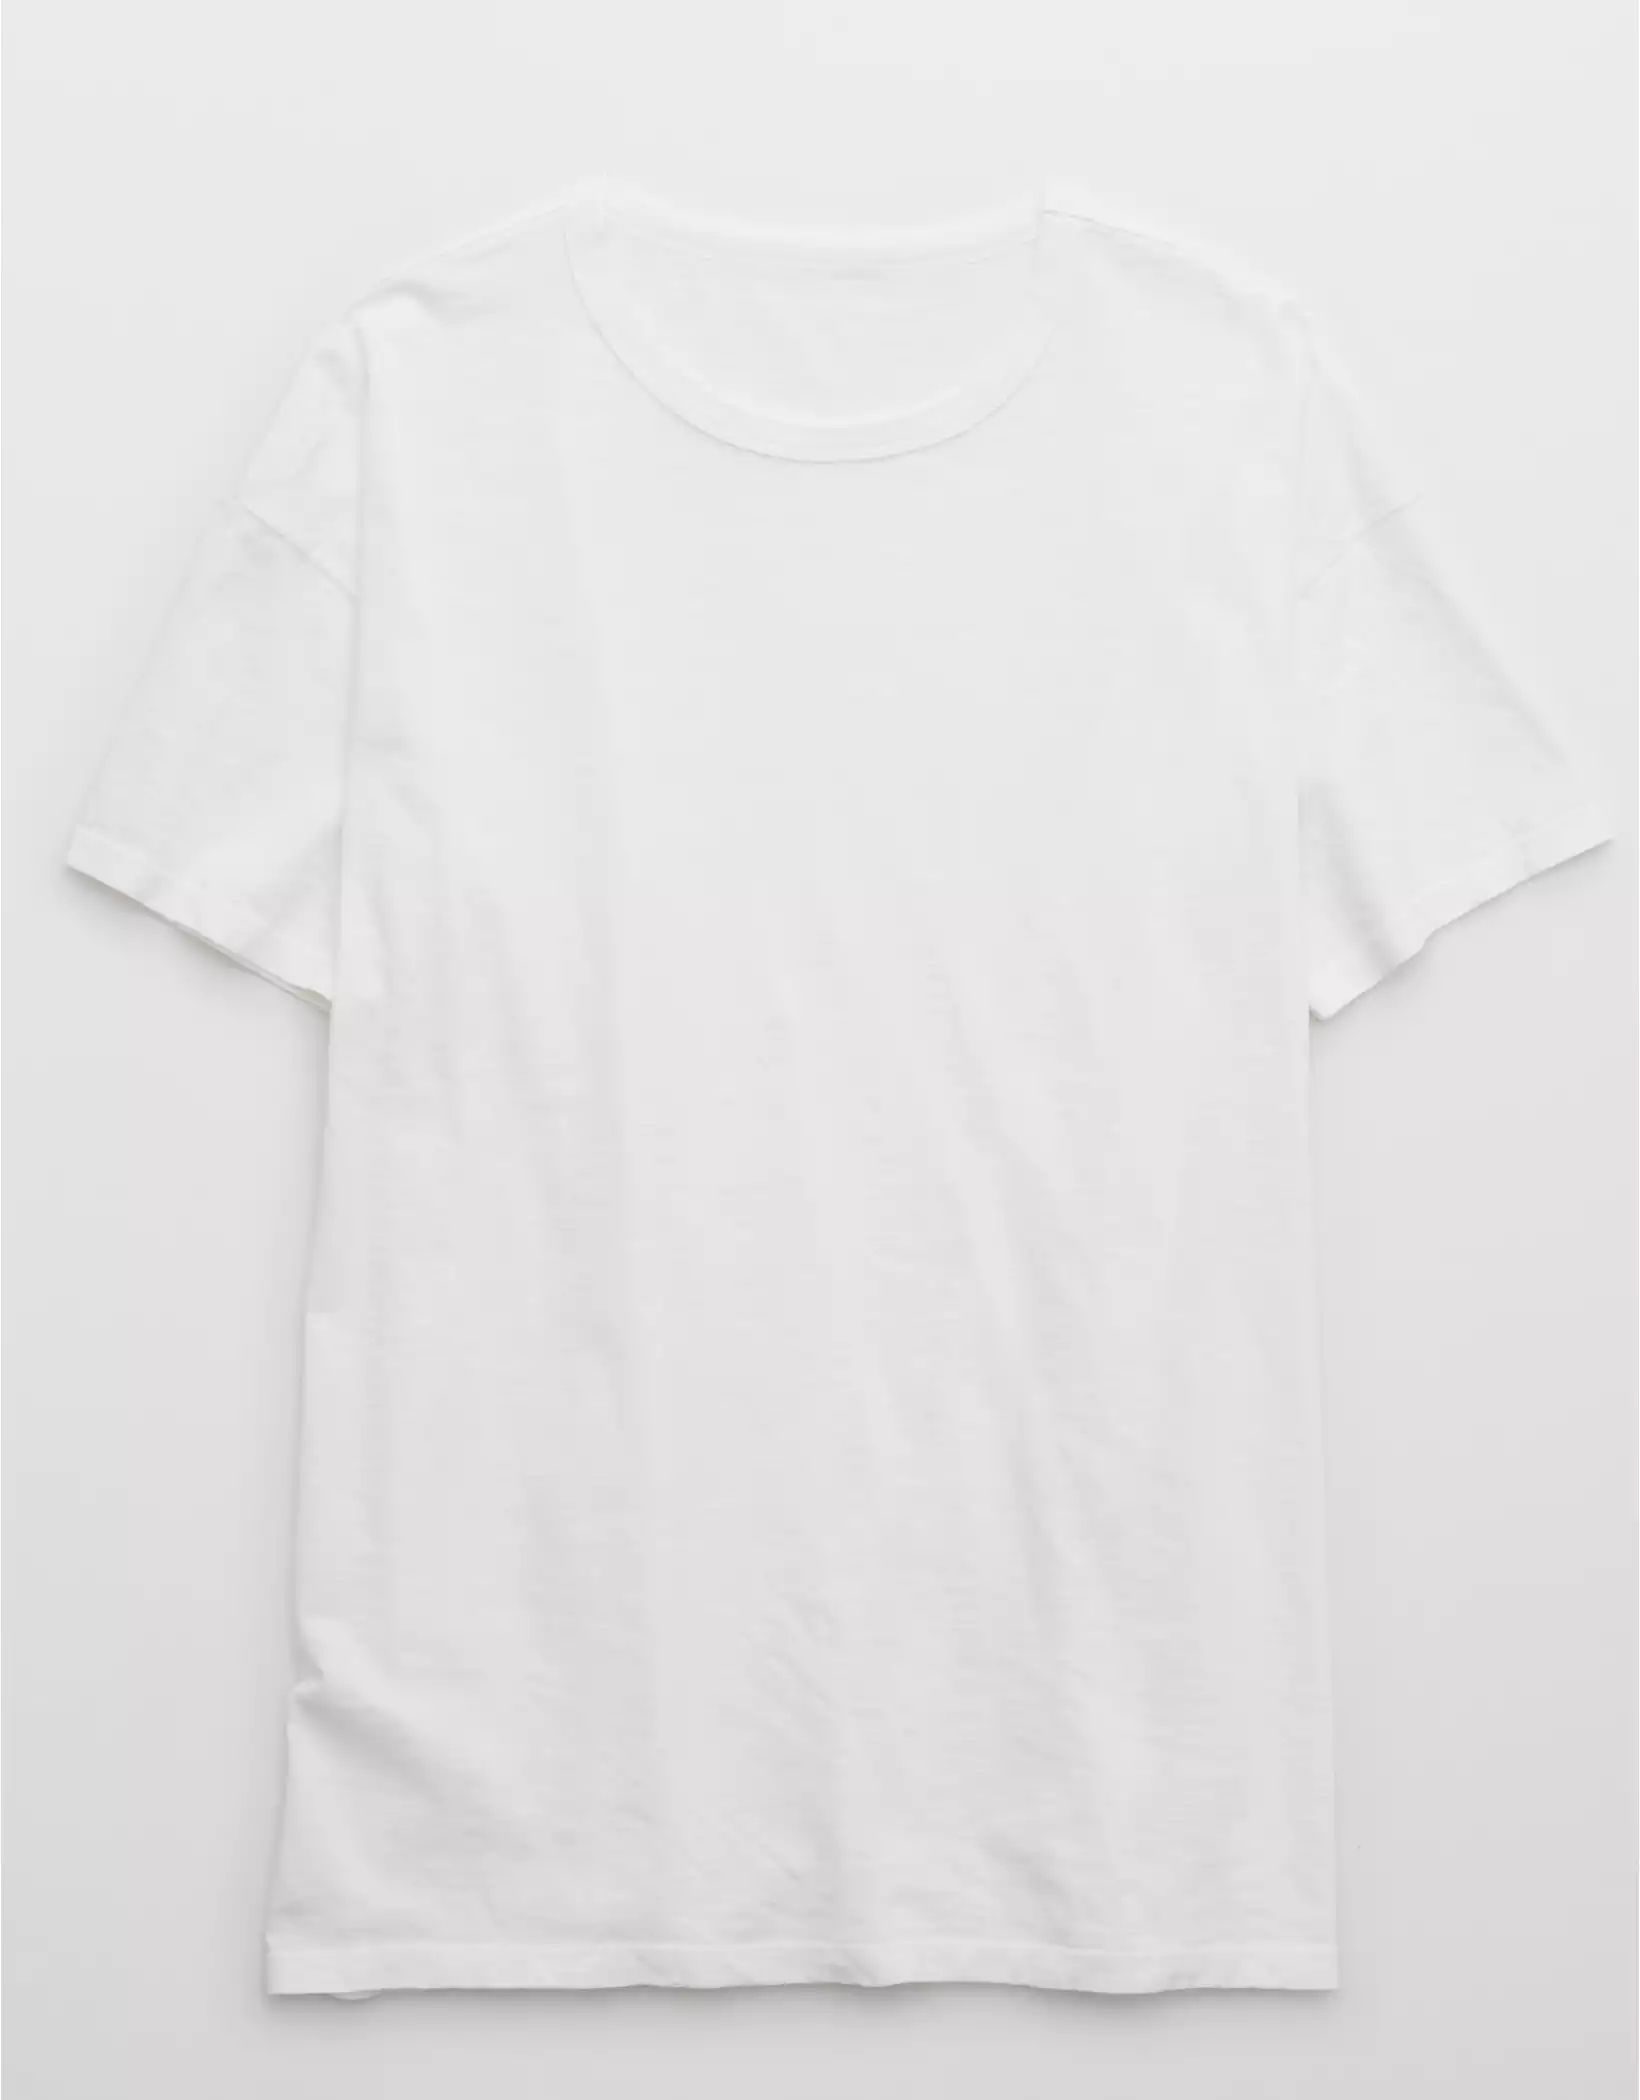 Aerie Distressed Basic Boyfriend T-Shirt | Aerie